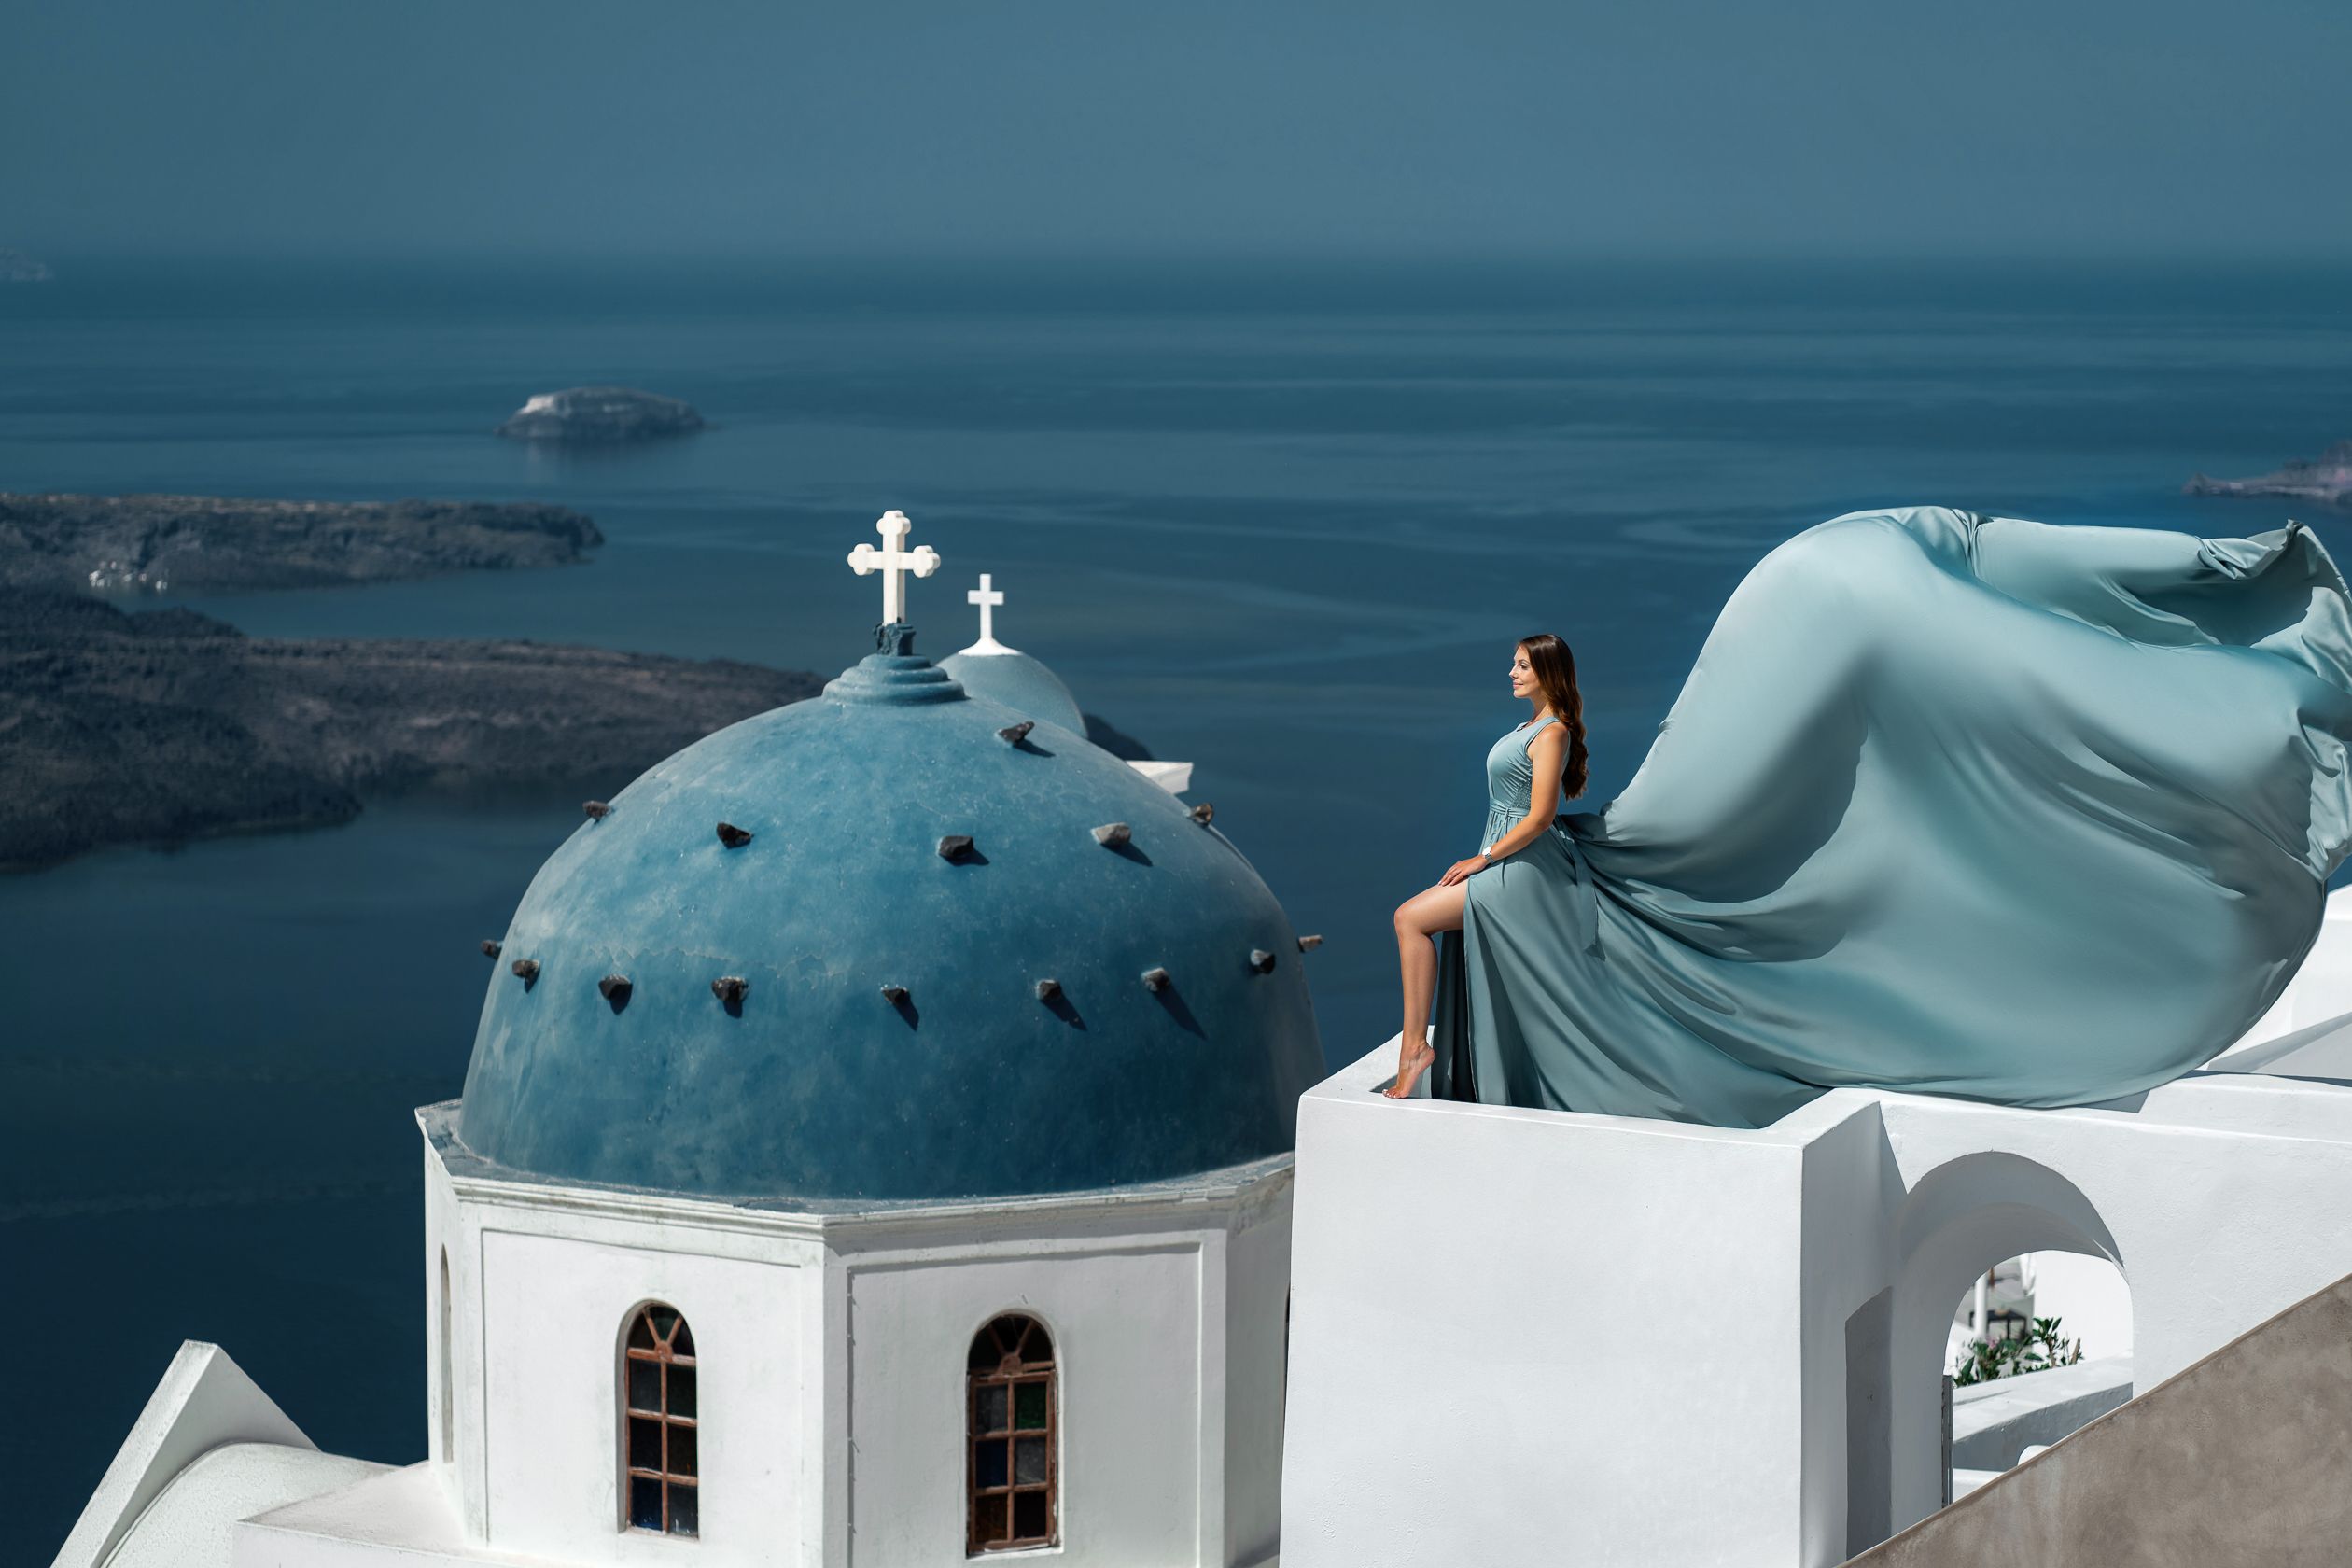 Blue dome photoshoot in Imerovigli, Santorini